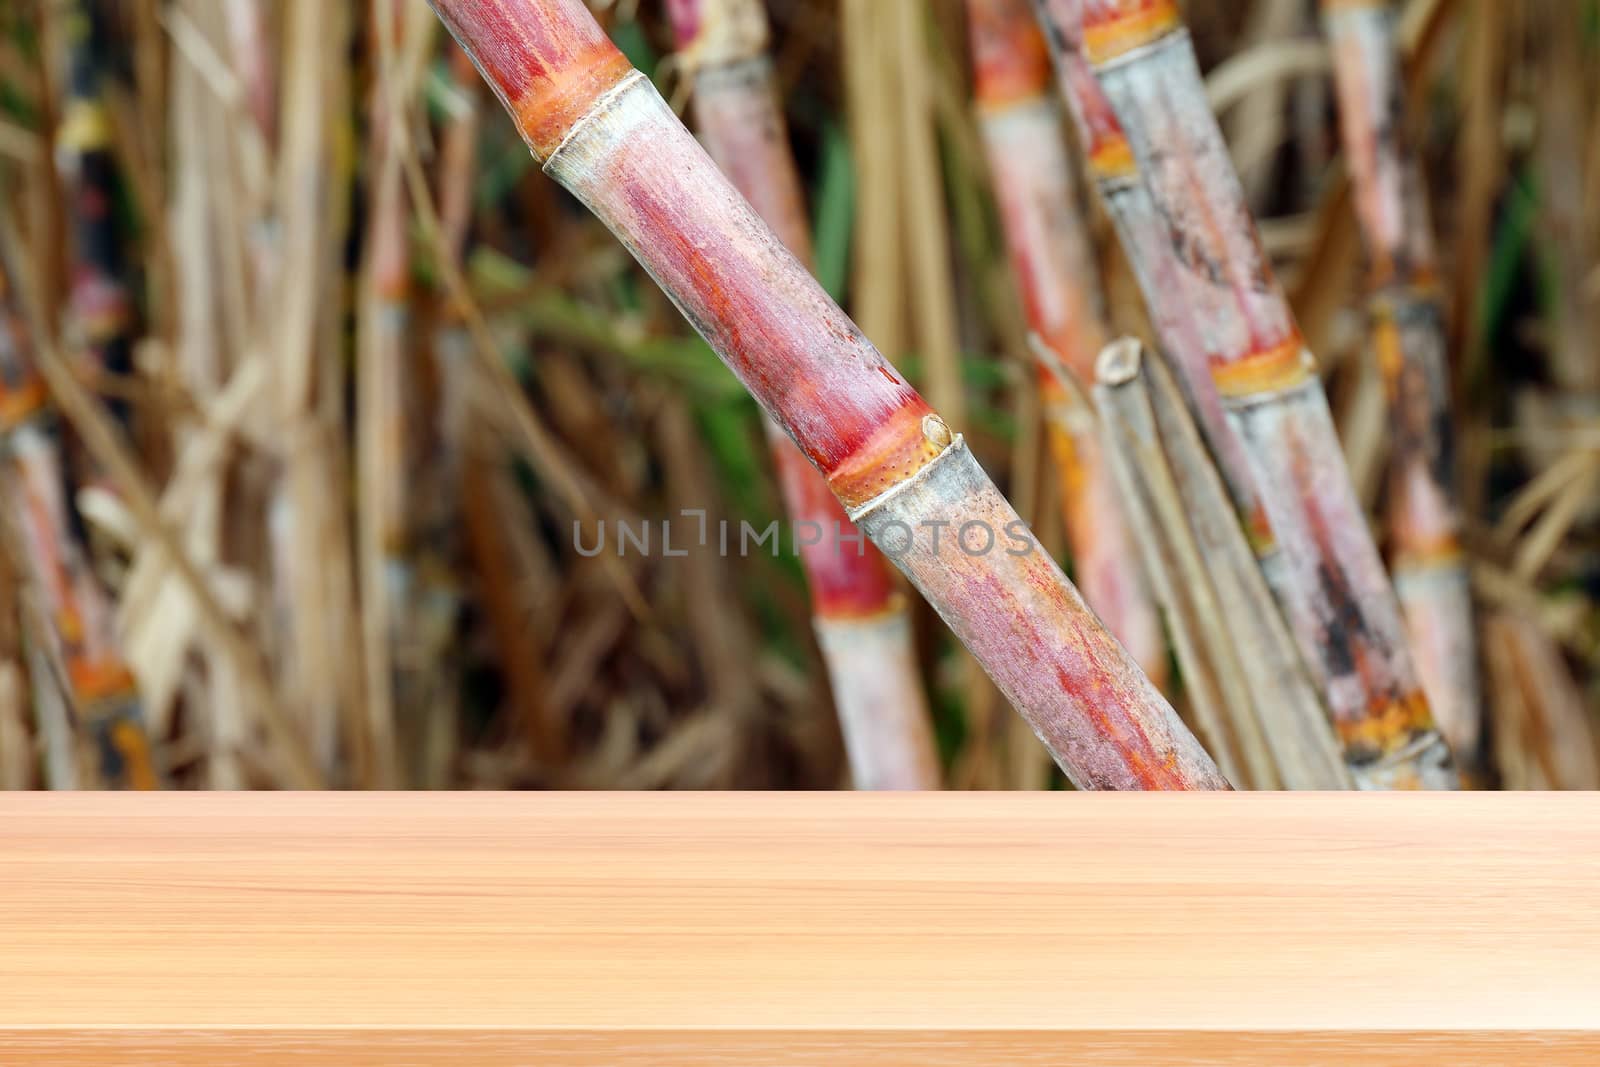 wood plank on sugarcane fresh plantation background, empty wood table floors on sugar cane farm, wood table board empty front sugarcane for mock up display products sugar cane juice molasses by cgdeaw